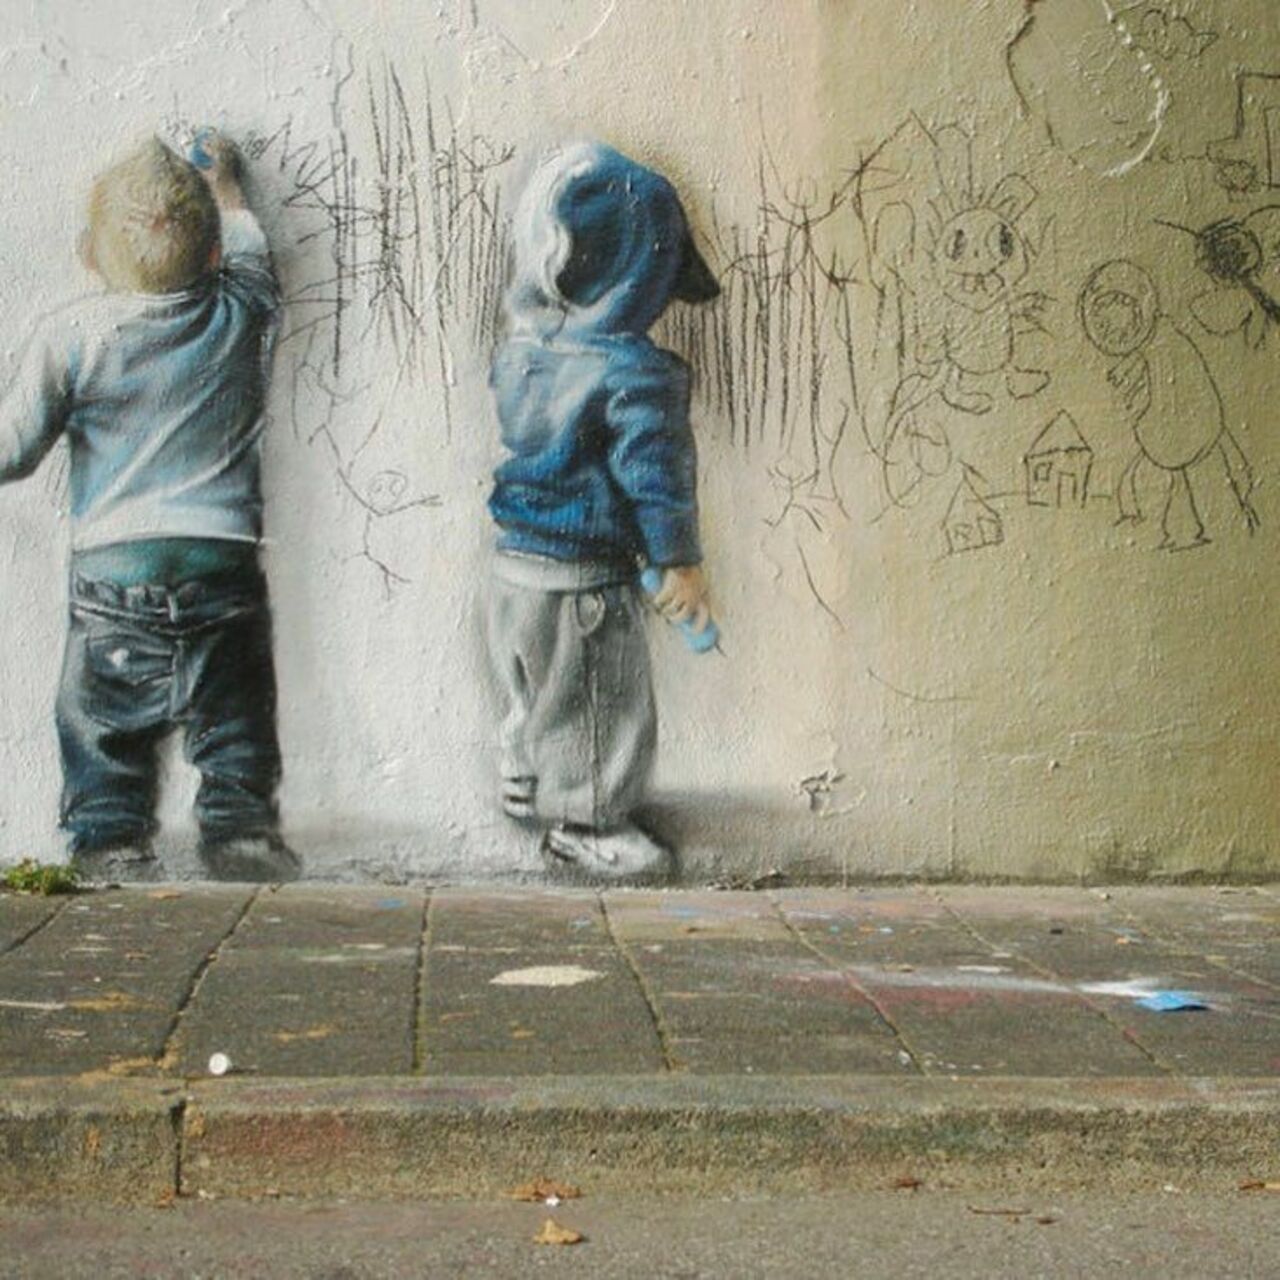 RT @StArtEverywhere: Kids #street #streetart #streetartparis #graff #graffiti #wallart #sprayart #urban #urbain #urbanart #urbainart #ar… https://t.co/Wx8T7cudFd